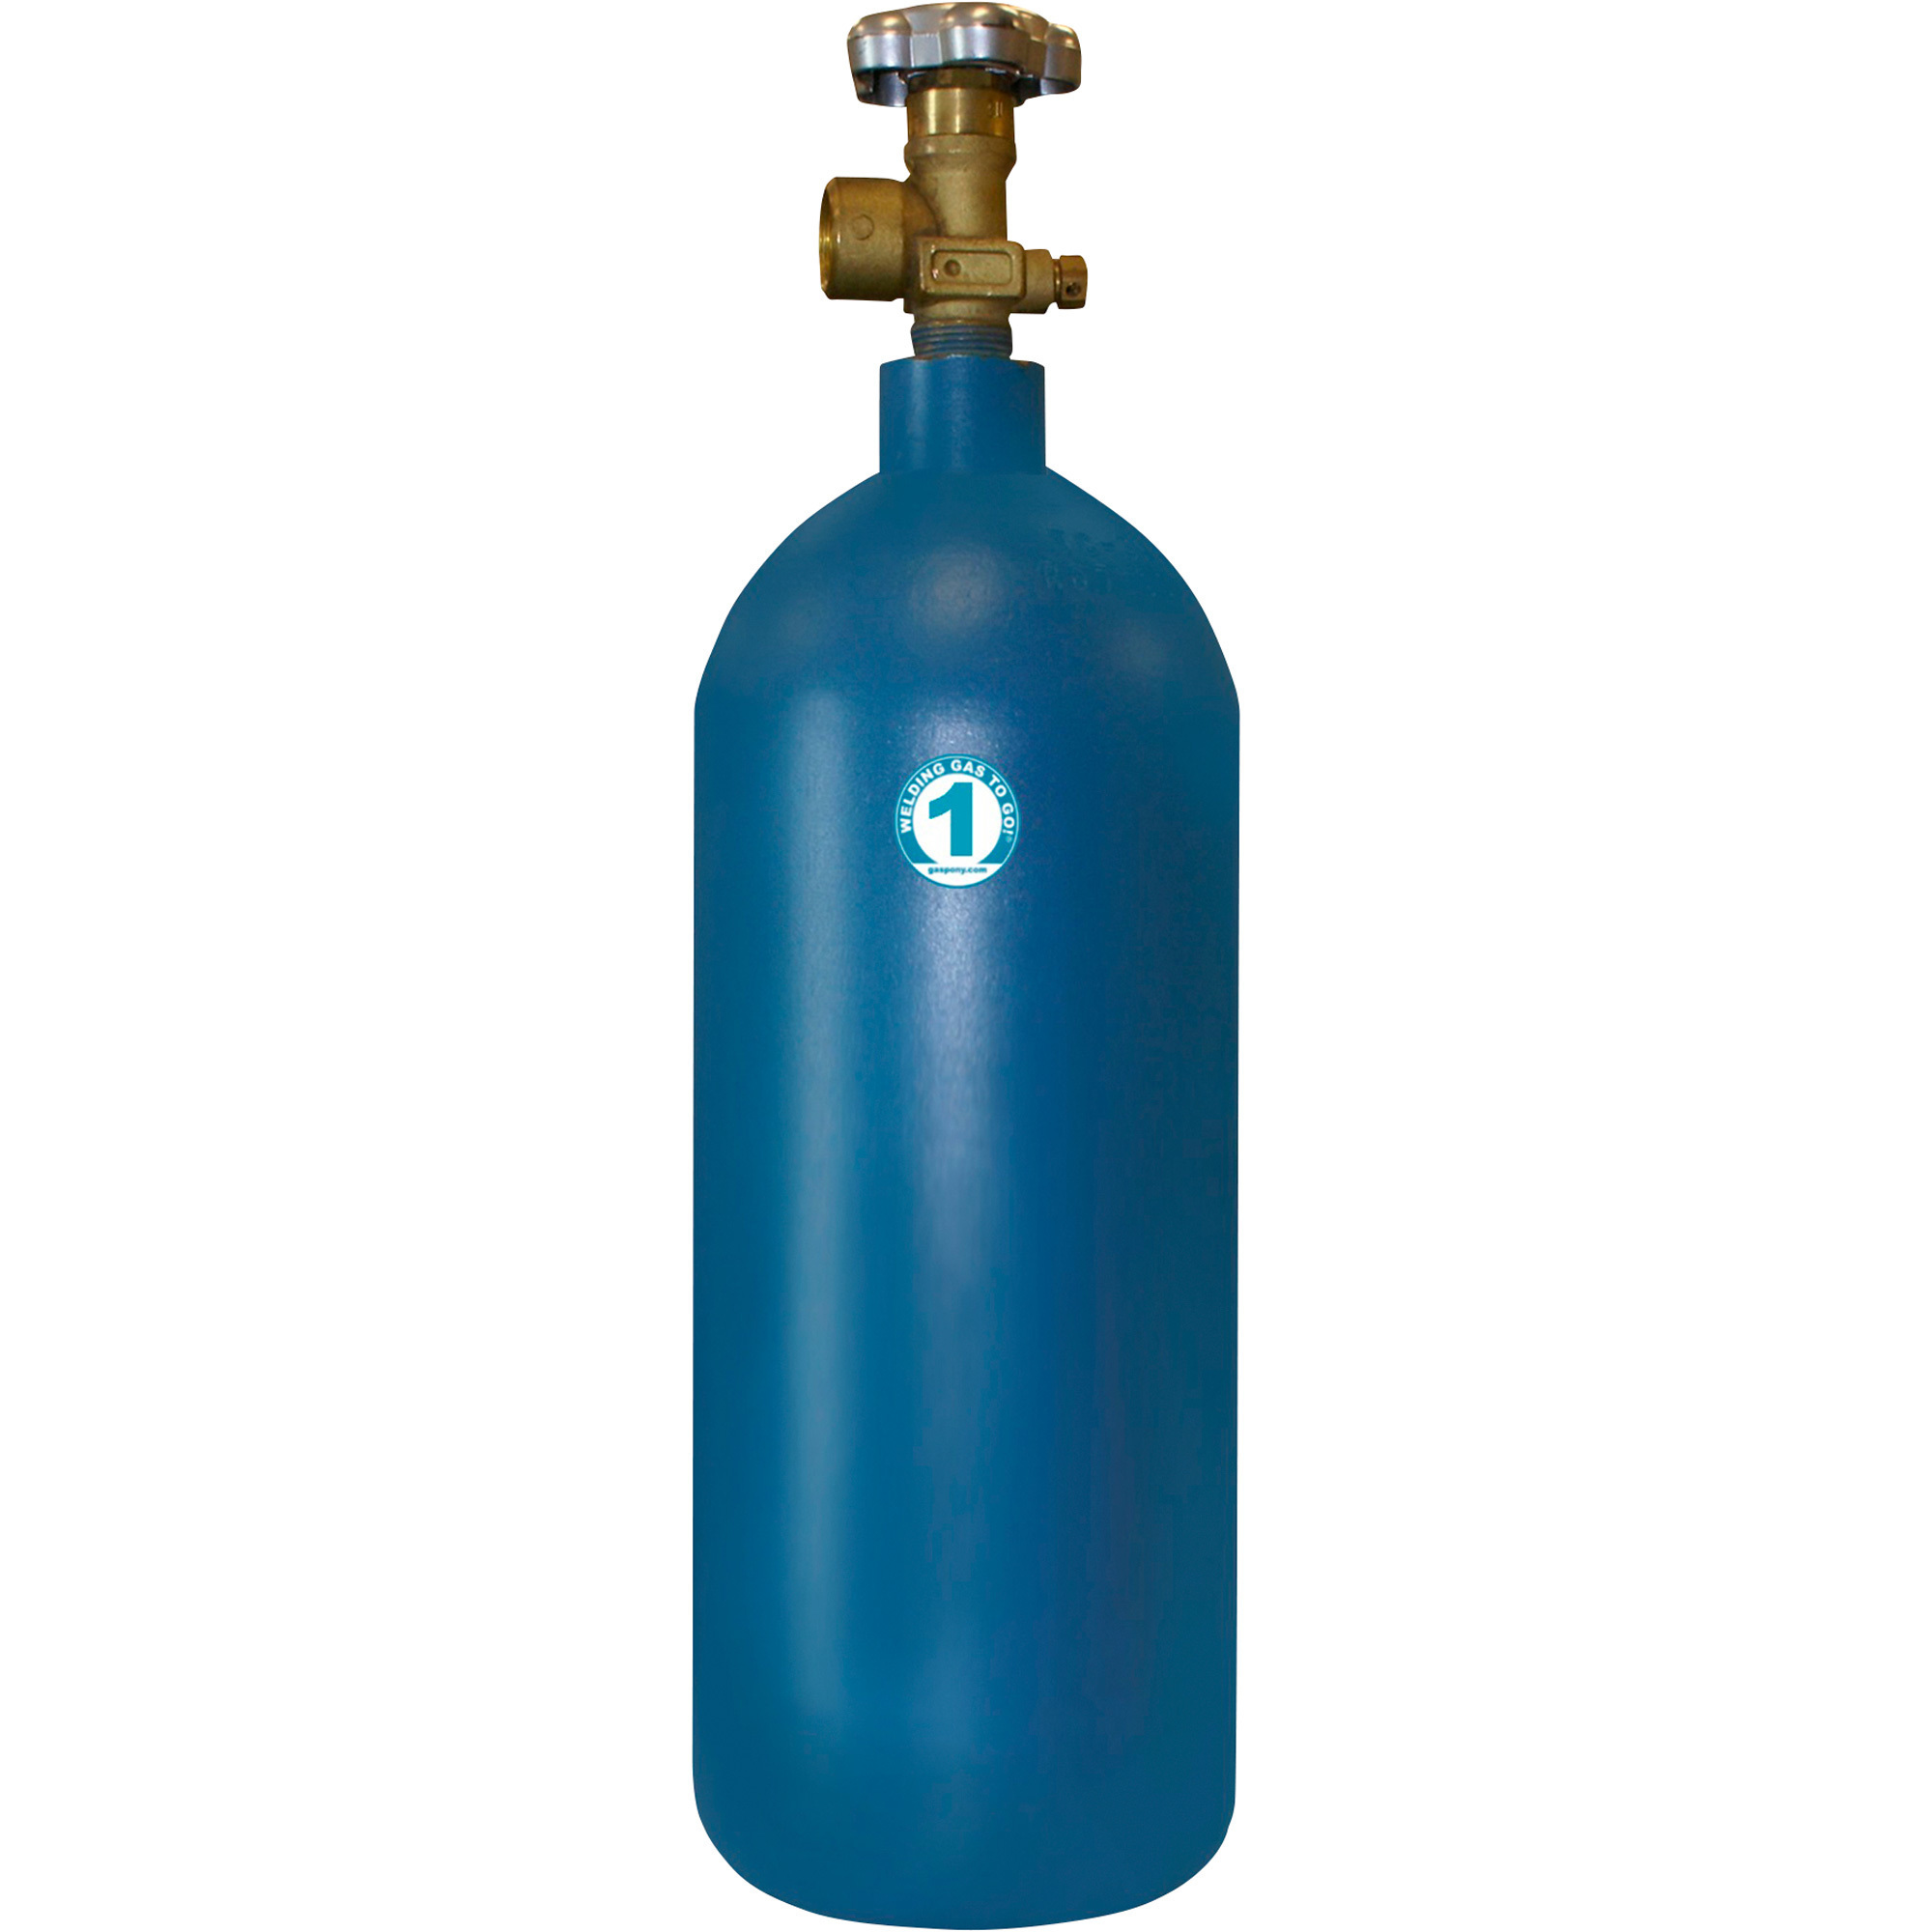 Thoroughbred Argon/CO2 Gas Cylinder â Size #1, 20CF